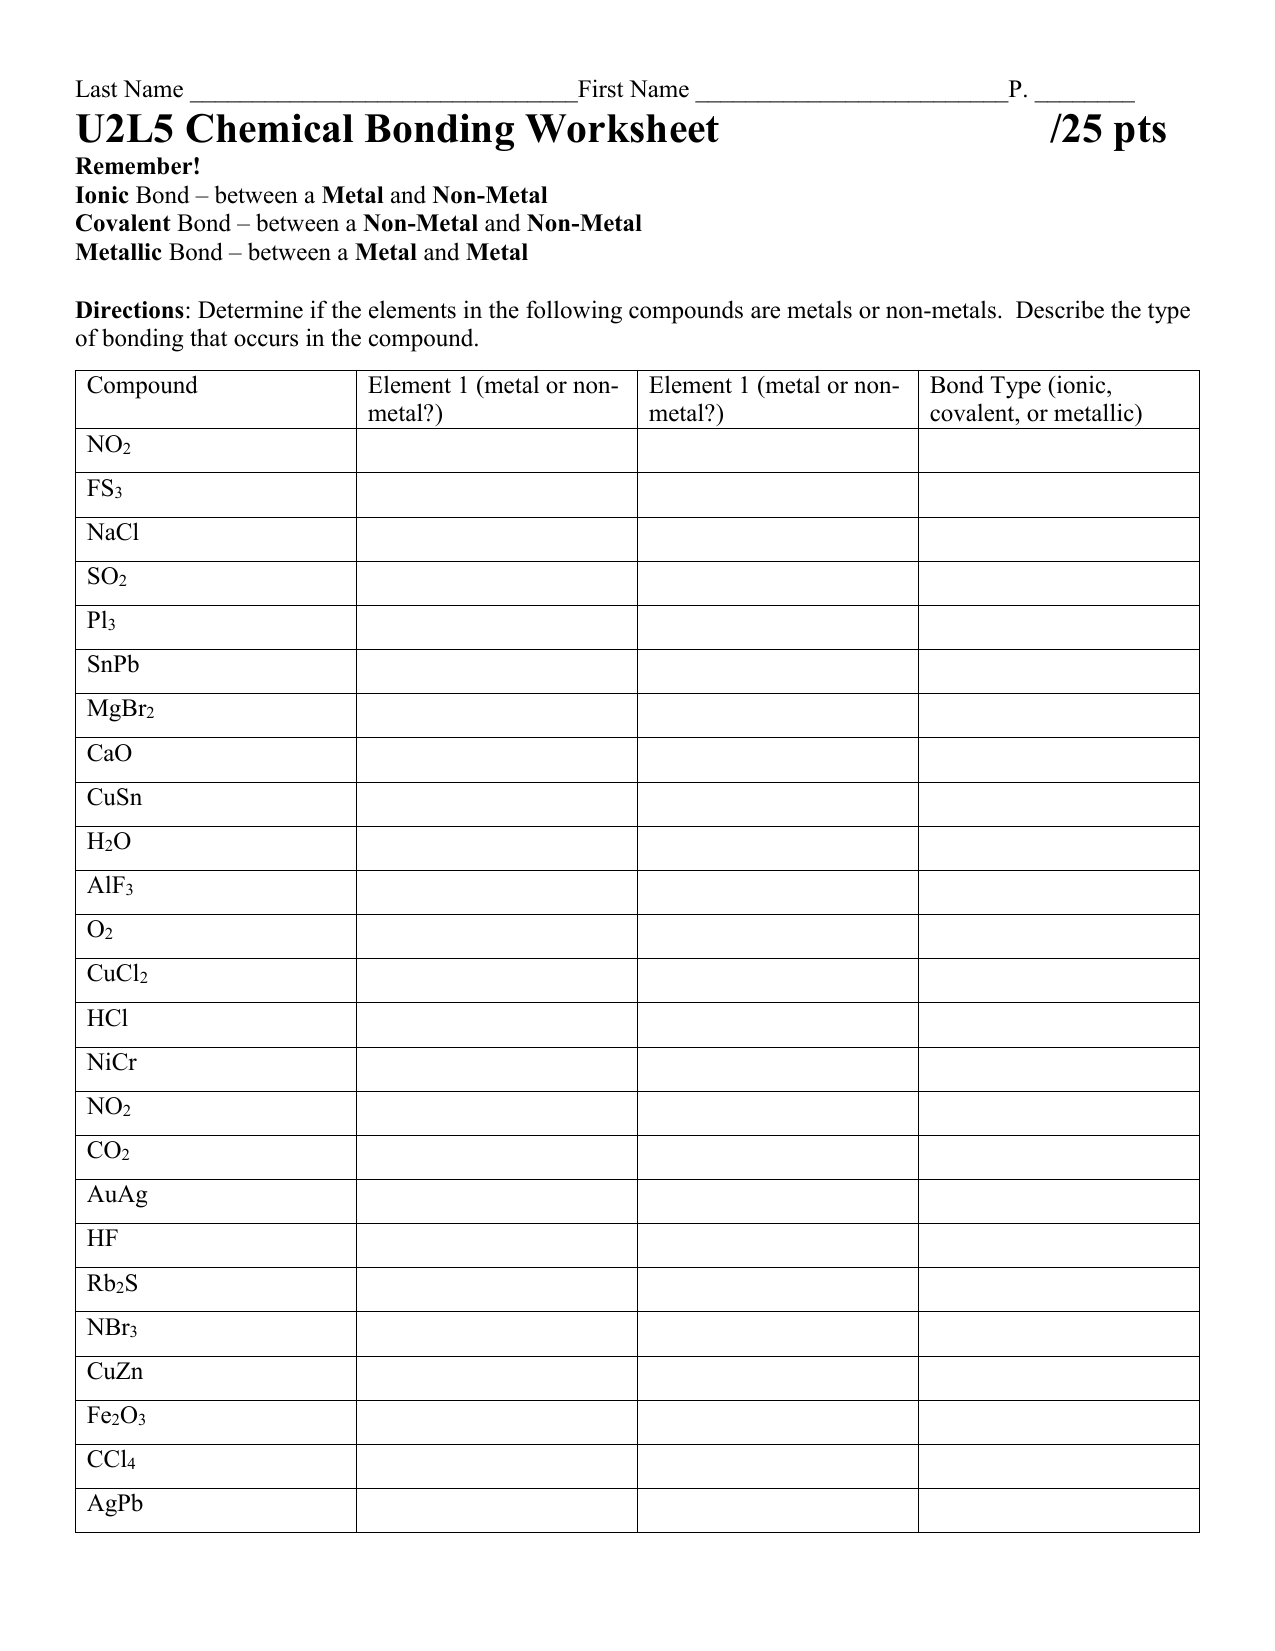 U22L22 Chemical Bonding Worksheet With Regard To Chemical Bonding Worksheet Key